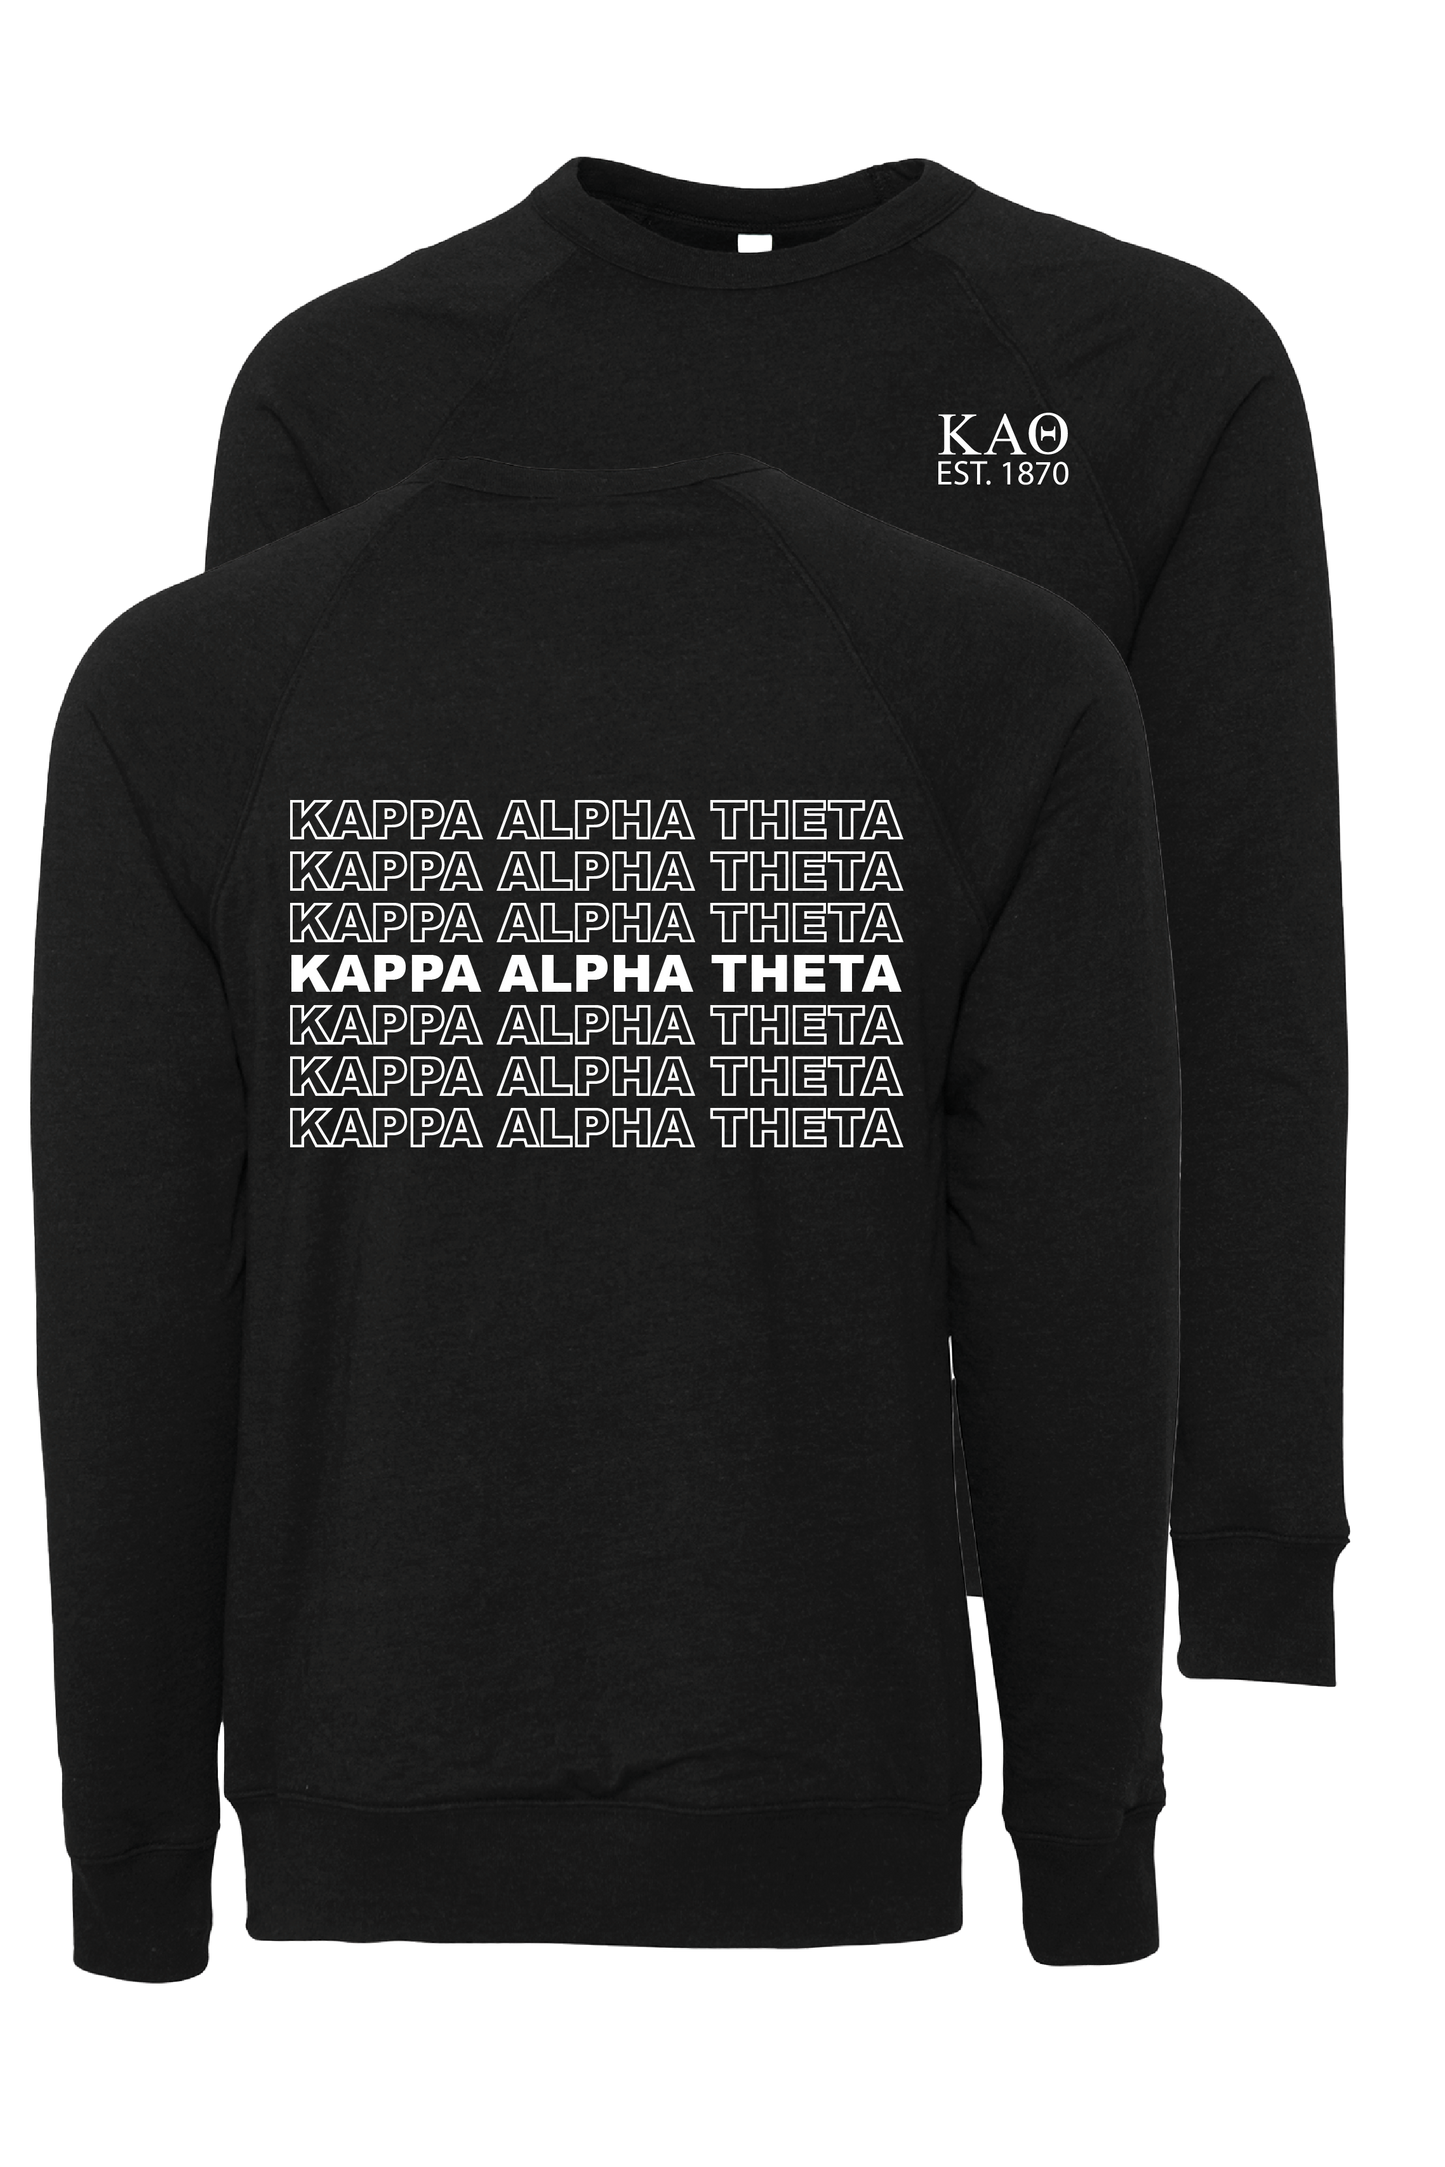 Kappa Alpha Theta Repeating Name Crewneck Sweatshirts